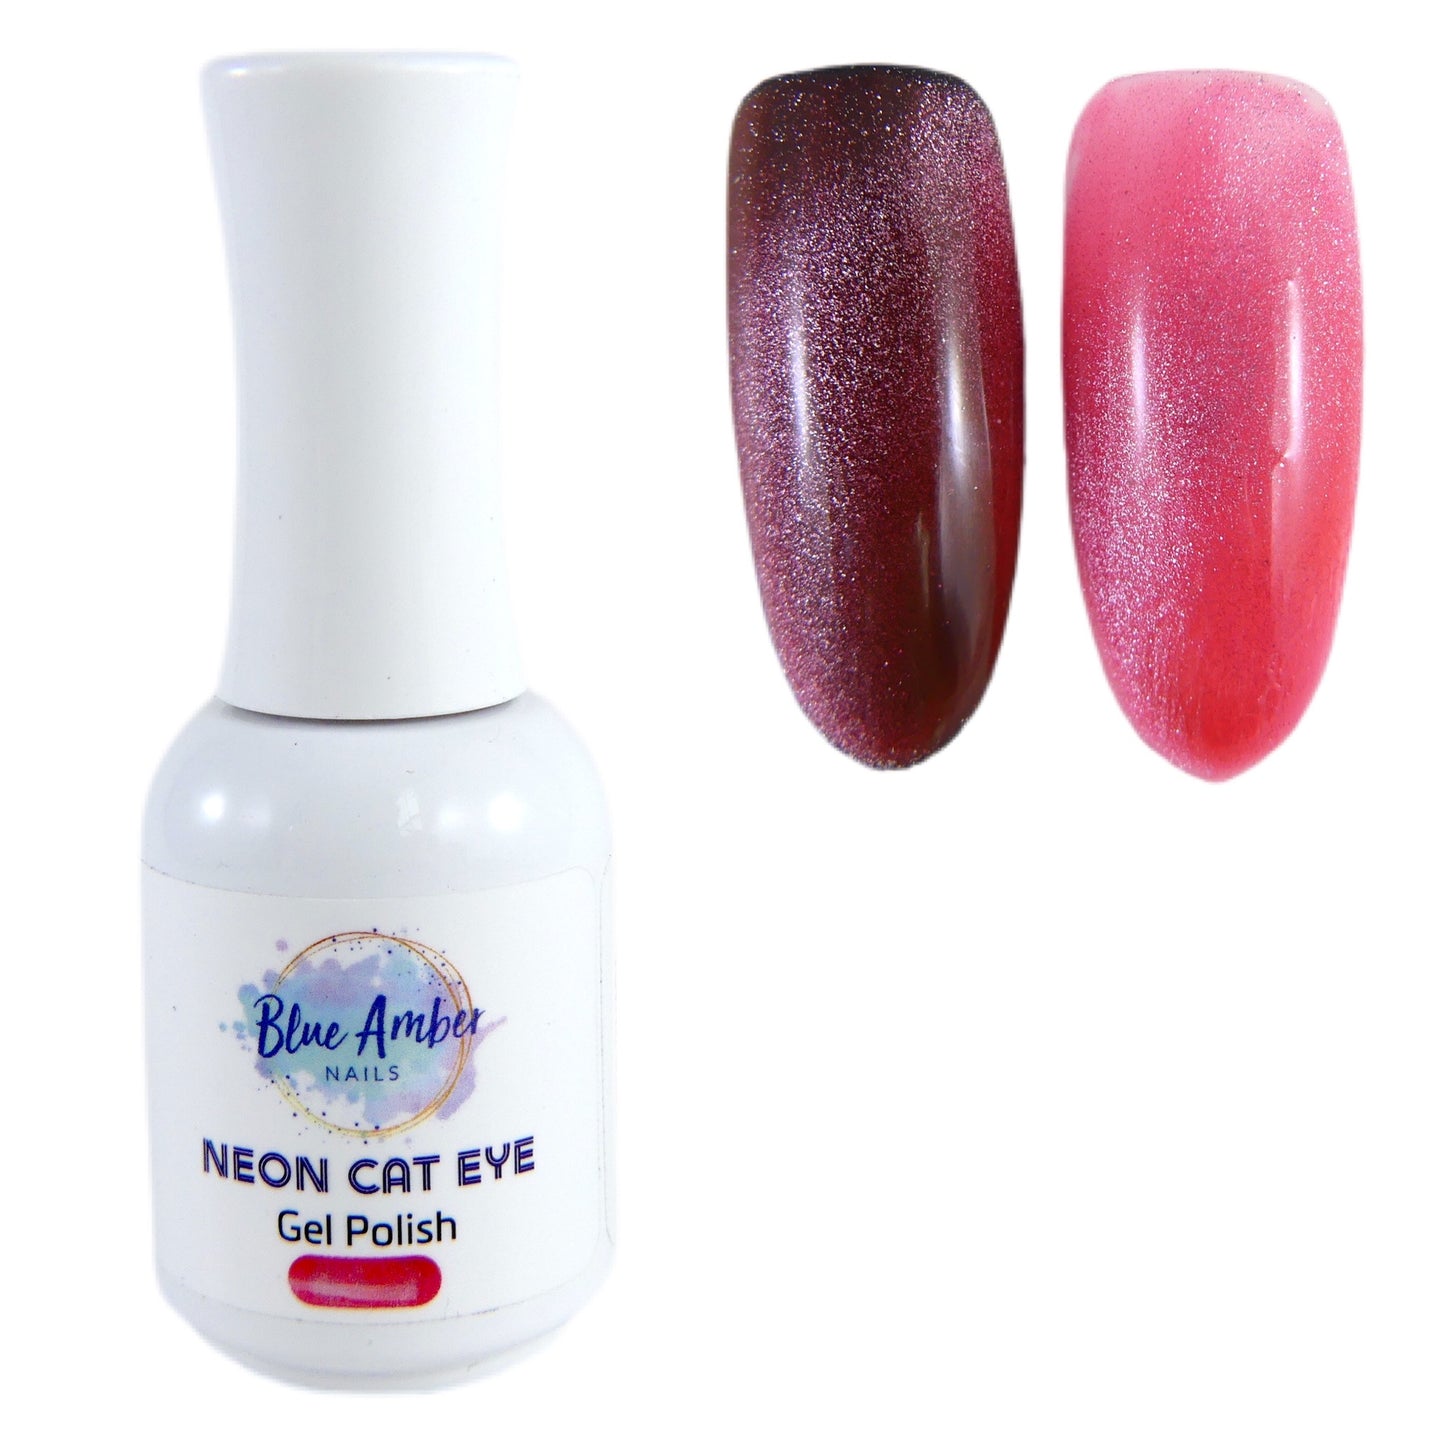 Neon Cat Eye Gel Polish - Coral - My Little Nail Art Shop